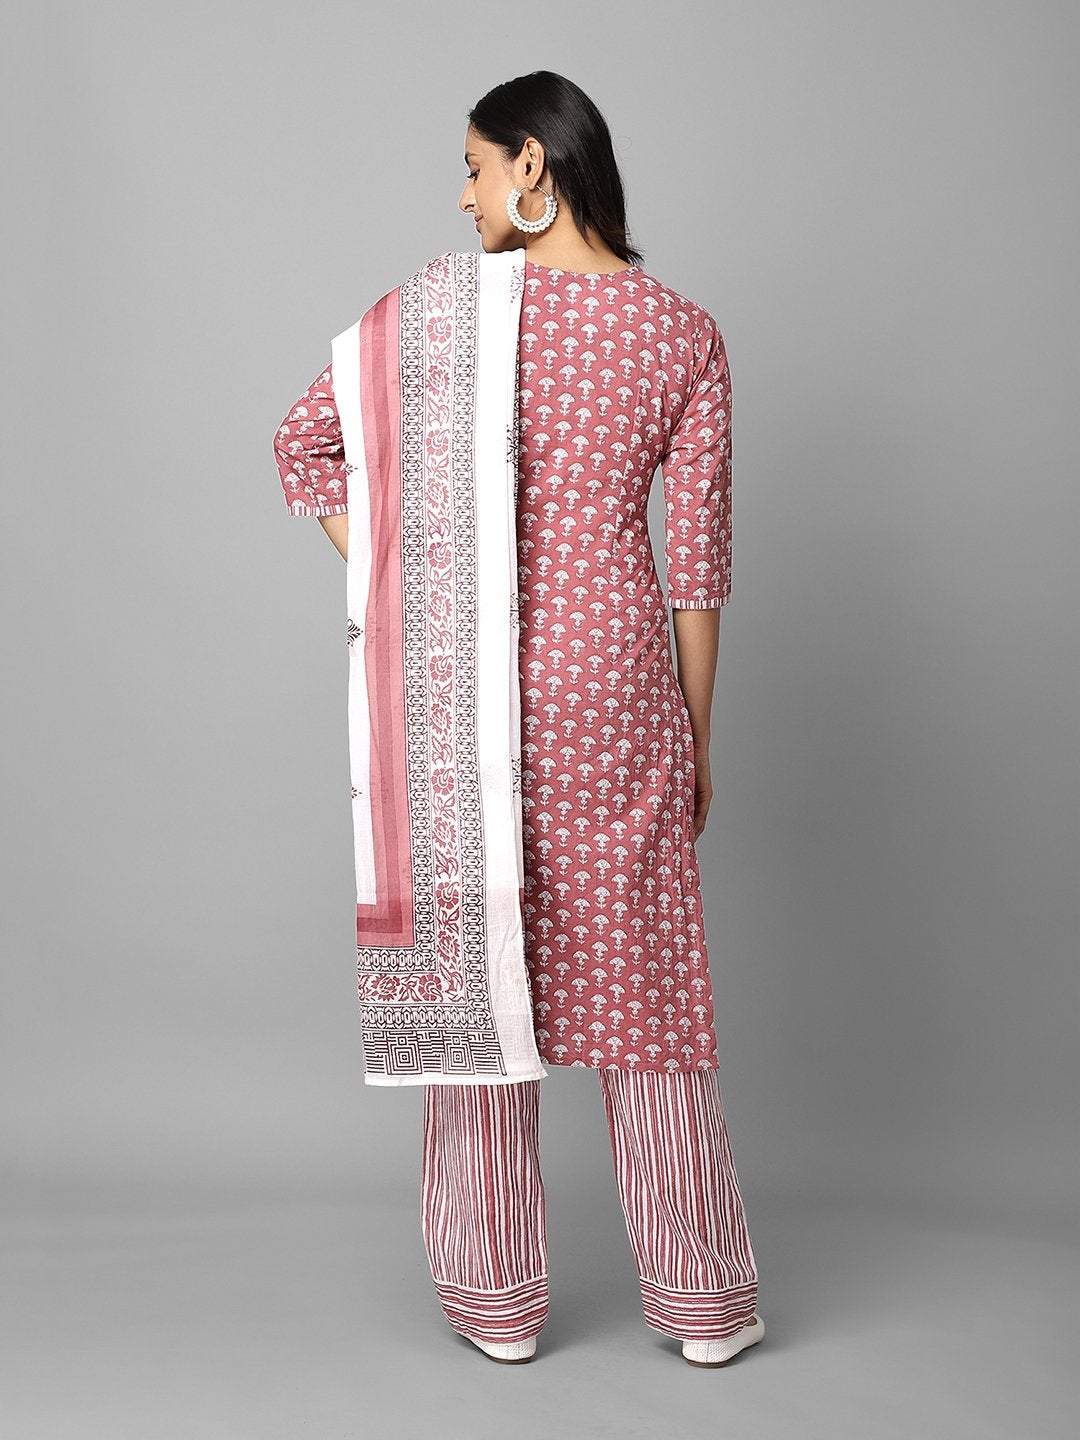 Women's Pink And White Ethnic Printed Side Slit Straight Kurta Palazzo And Dupatta Set - Azira